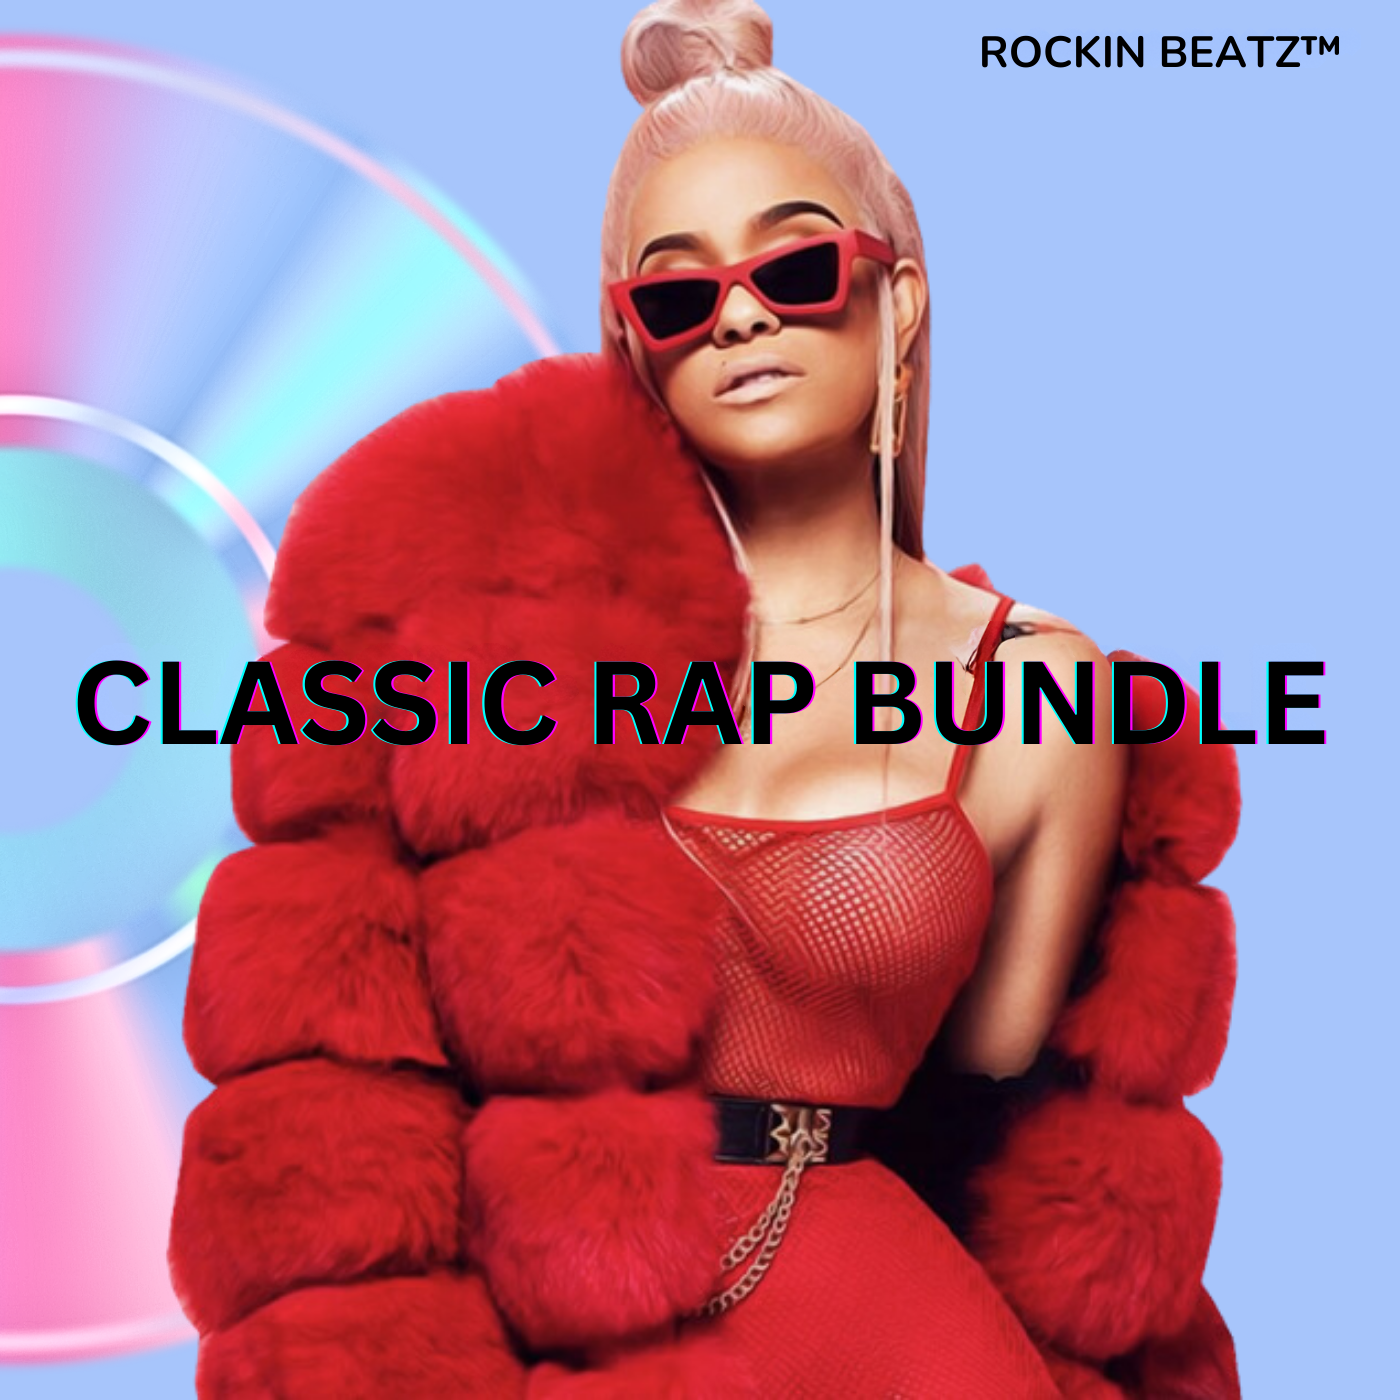 🏆 CLASSIC RAP BUNDLE 👉🏻 ONLY $799.99 🙀 GET YOUR ALBUM BUNDLE & VOCALS MIXED FOR FREE! 🚀 SAVE $100’s 🤑